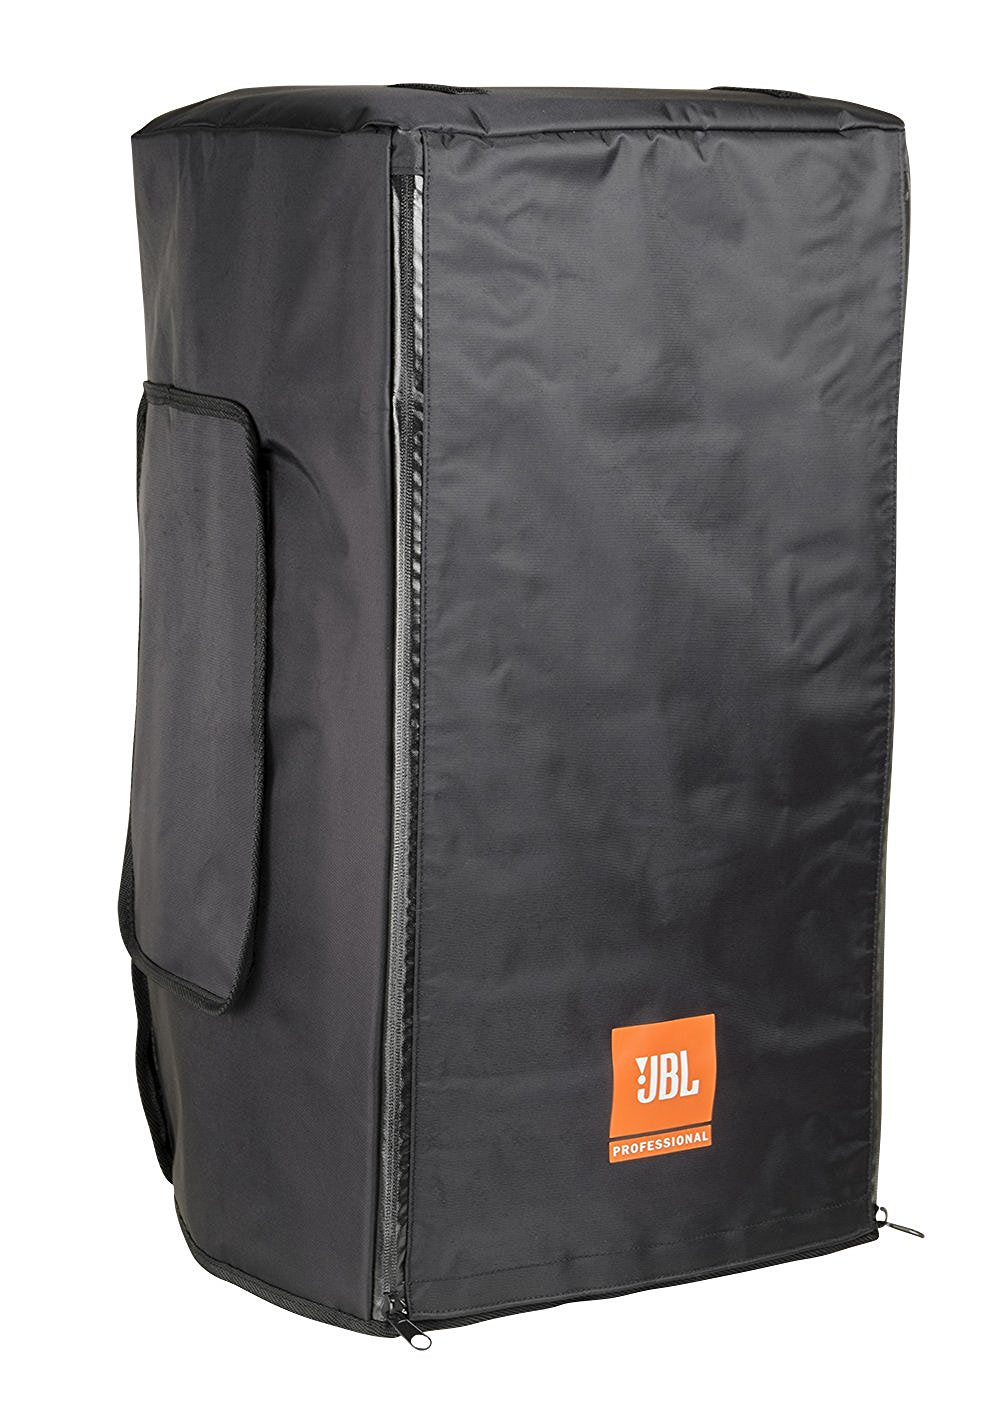 JBL Bags EON612-CVR-WX Convertible Cover